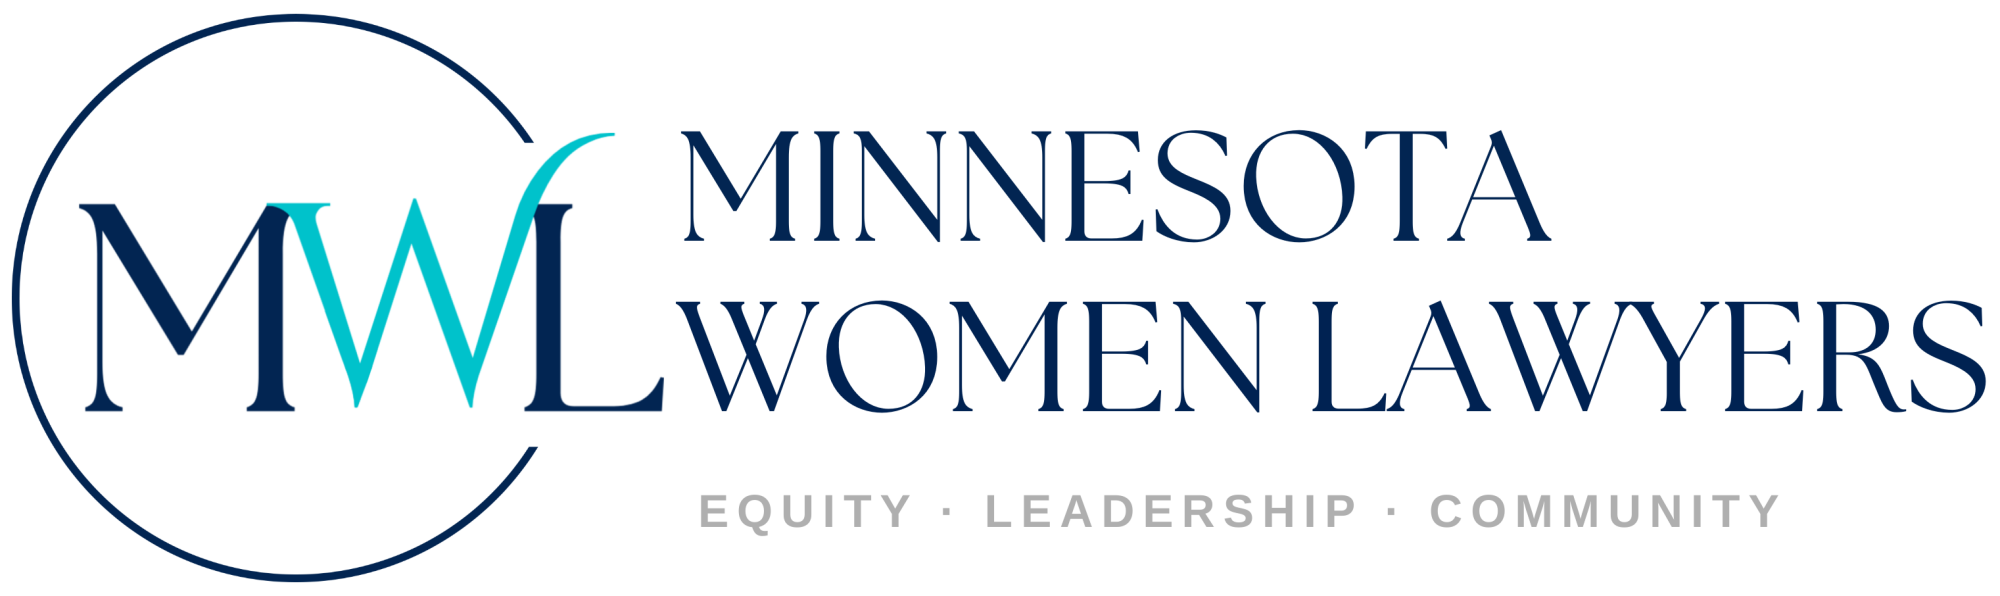 Minnesota Women Lawyers Logo